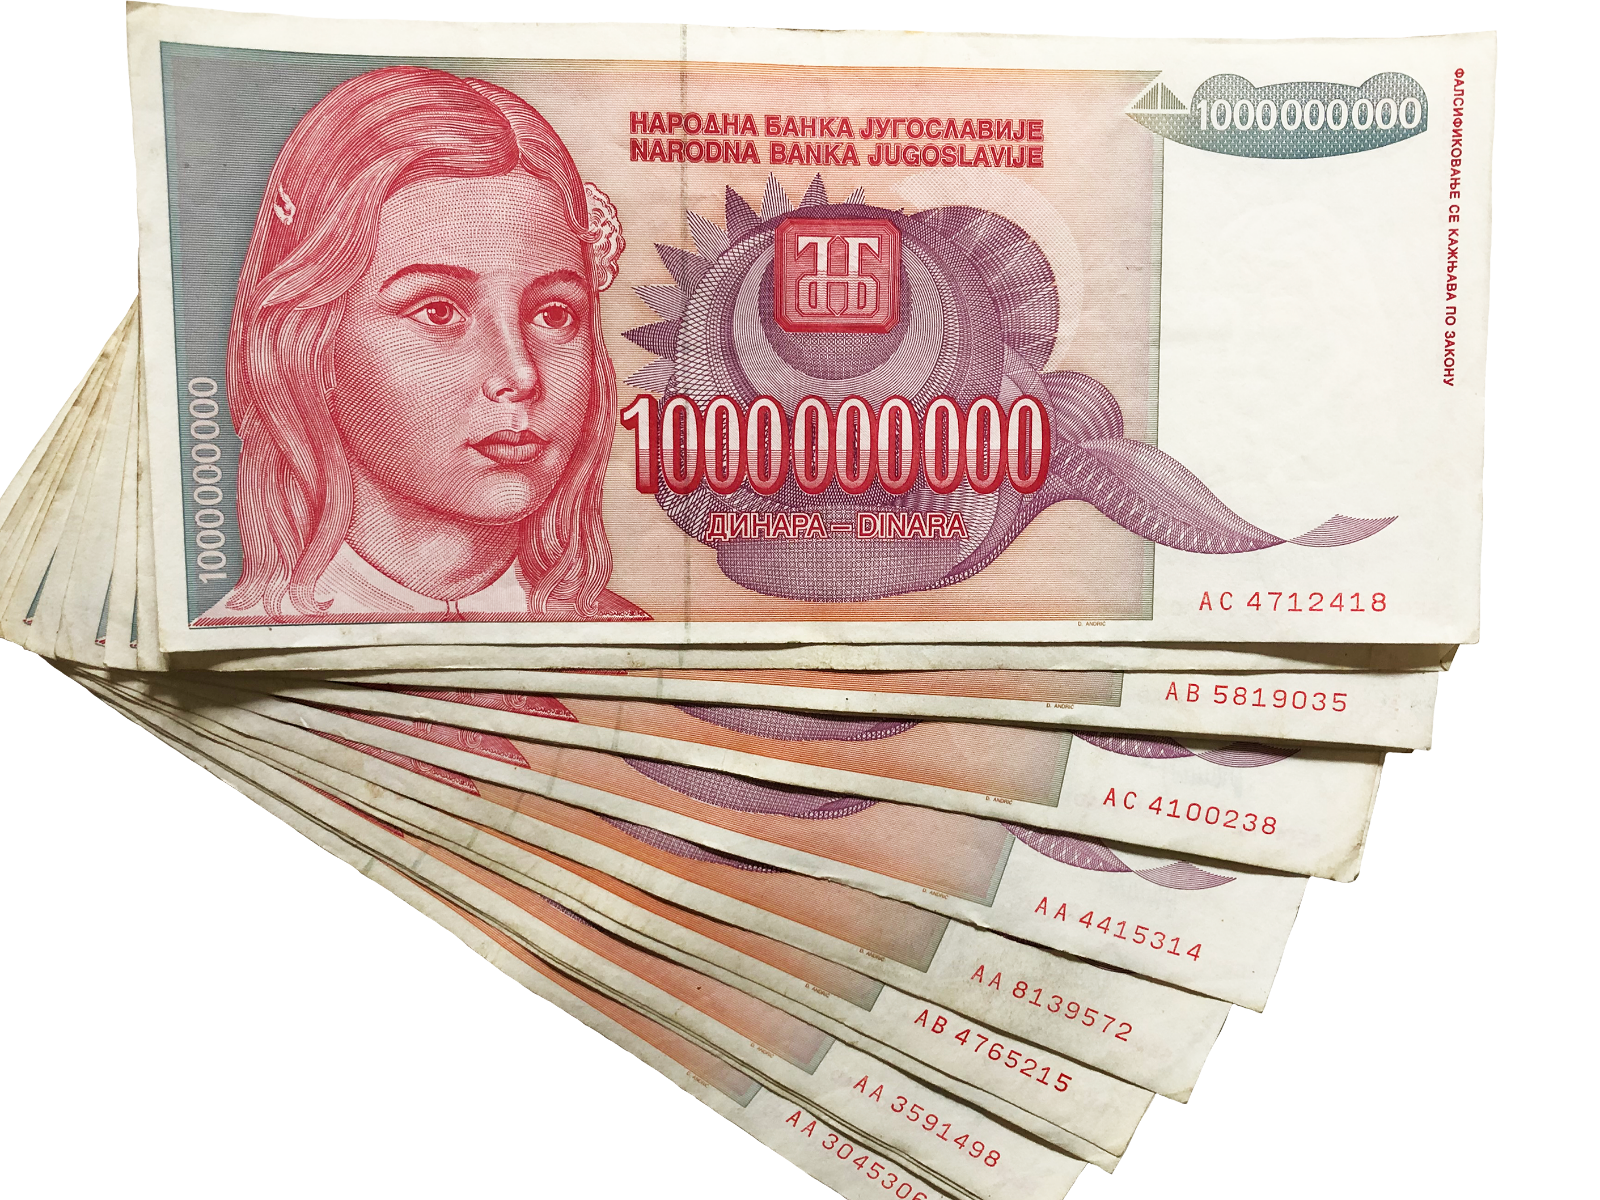 Yugoslavia 1 Billion Dinara 1993 Circulated Banknote Currency Money Cash Bill